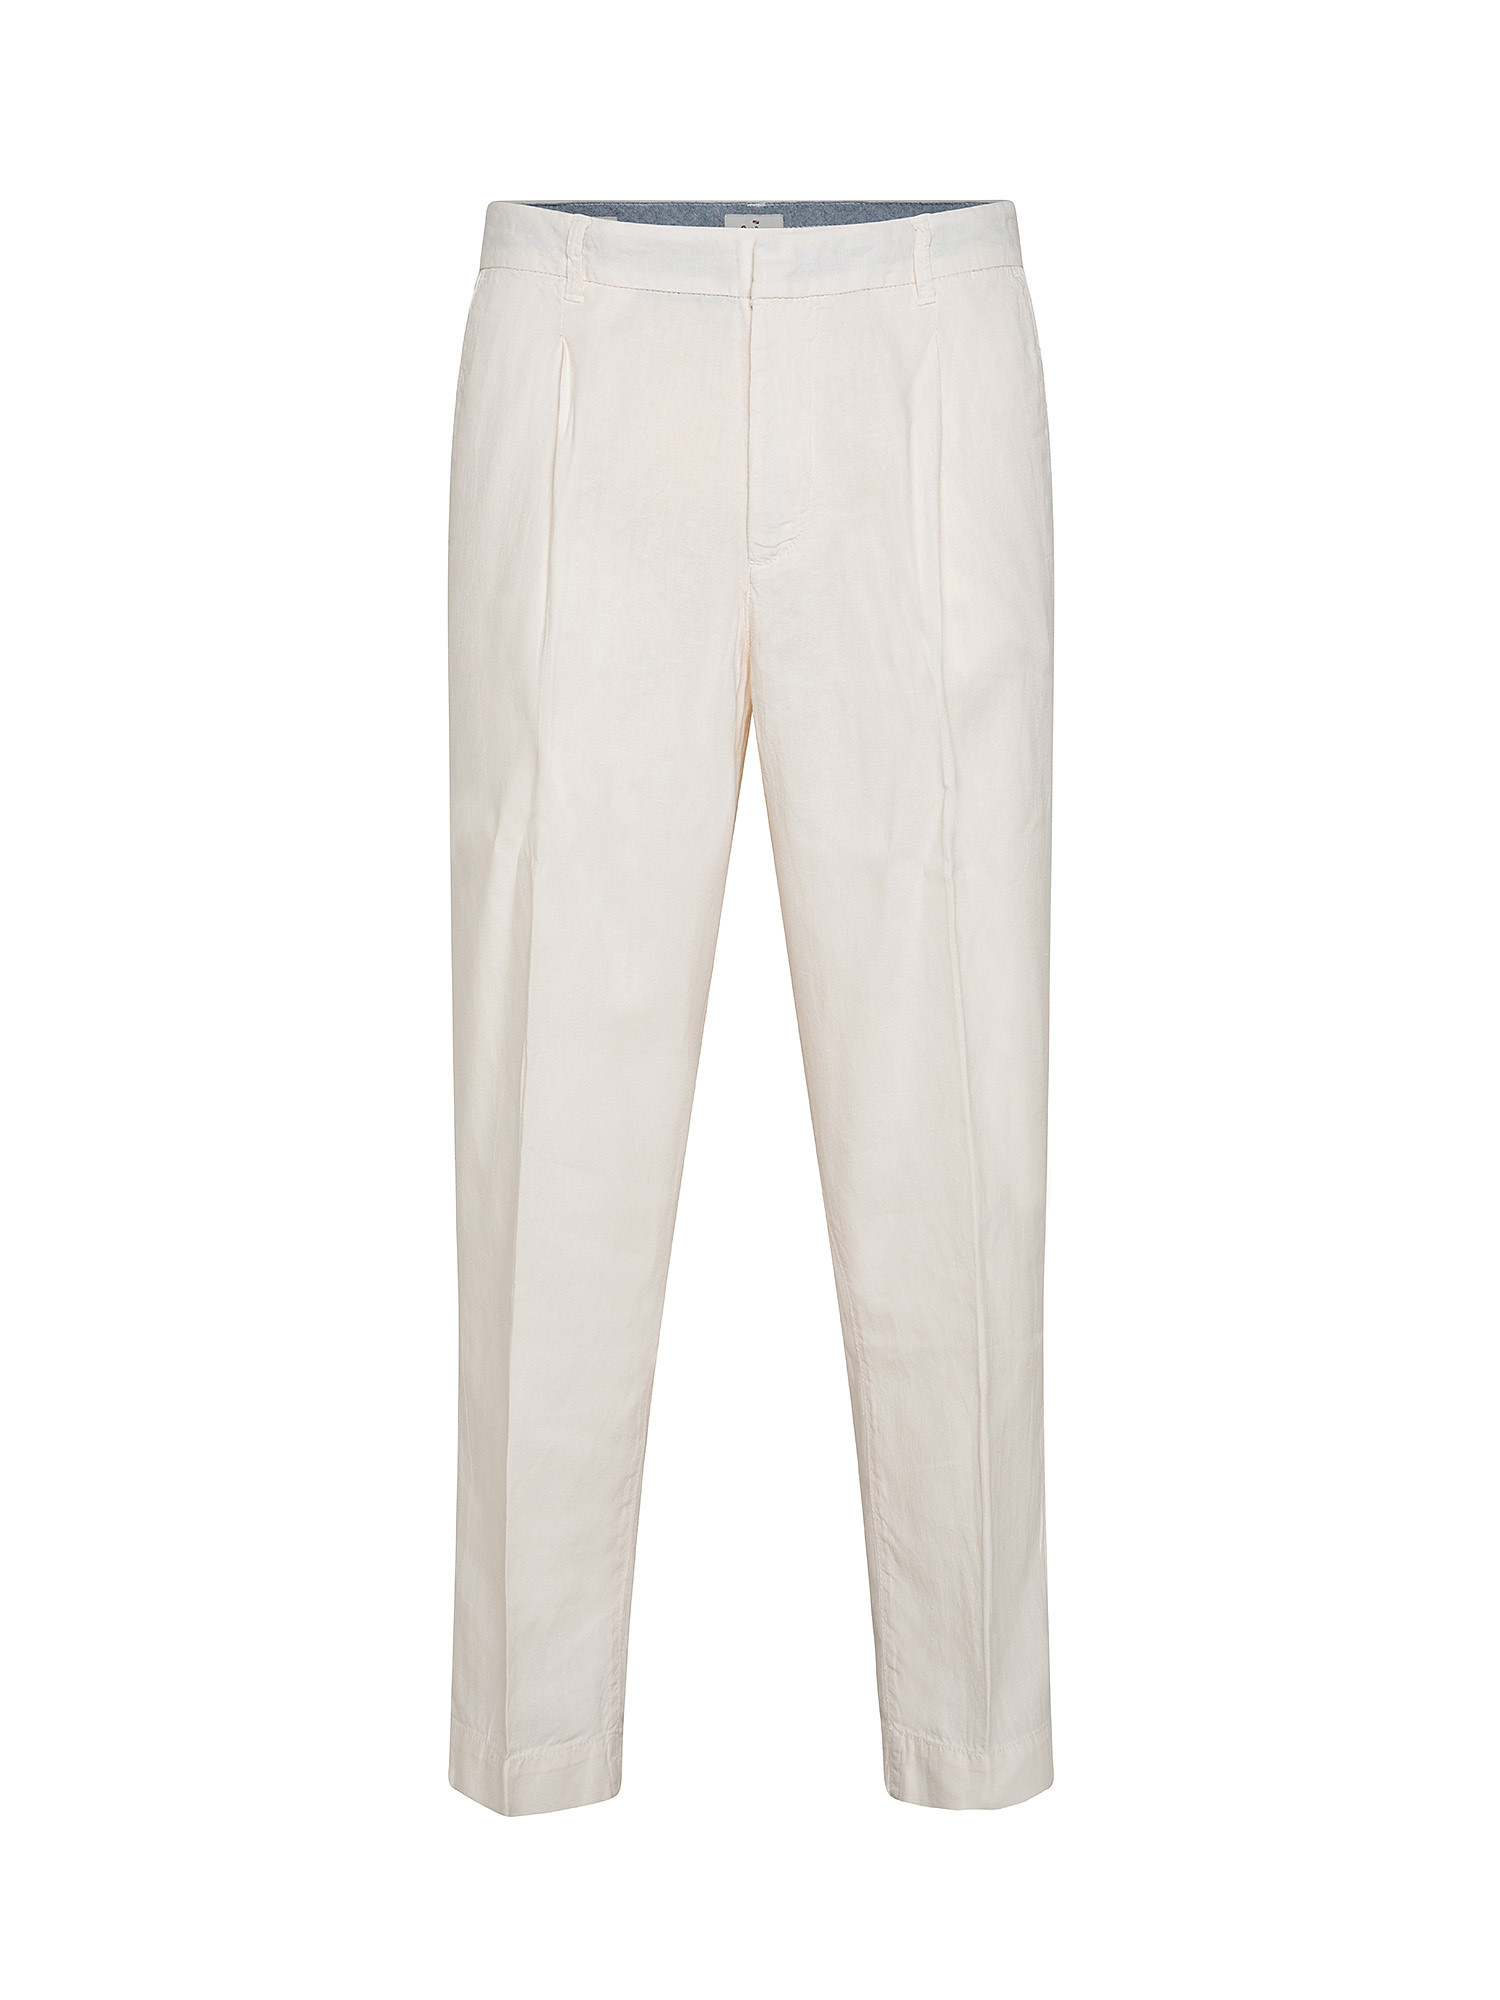 Pantalone in misto lino, Bianco panna, large image number 0